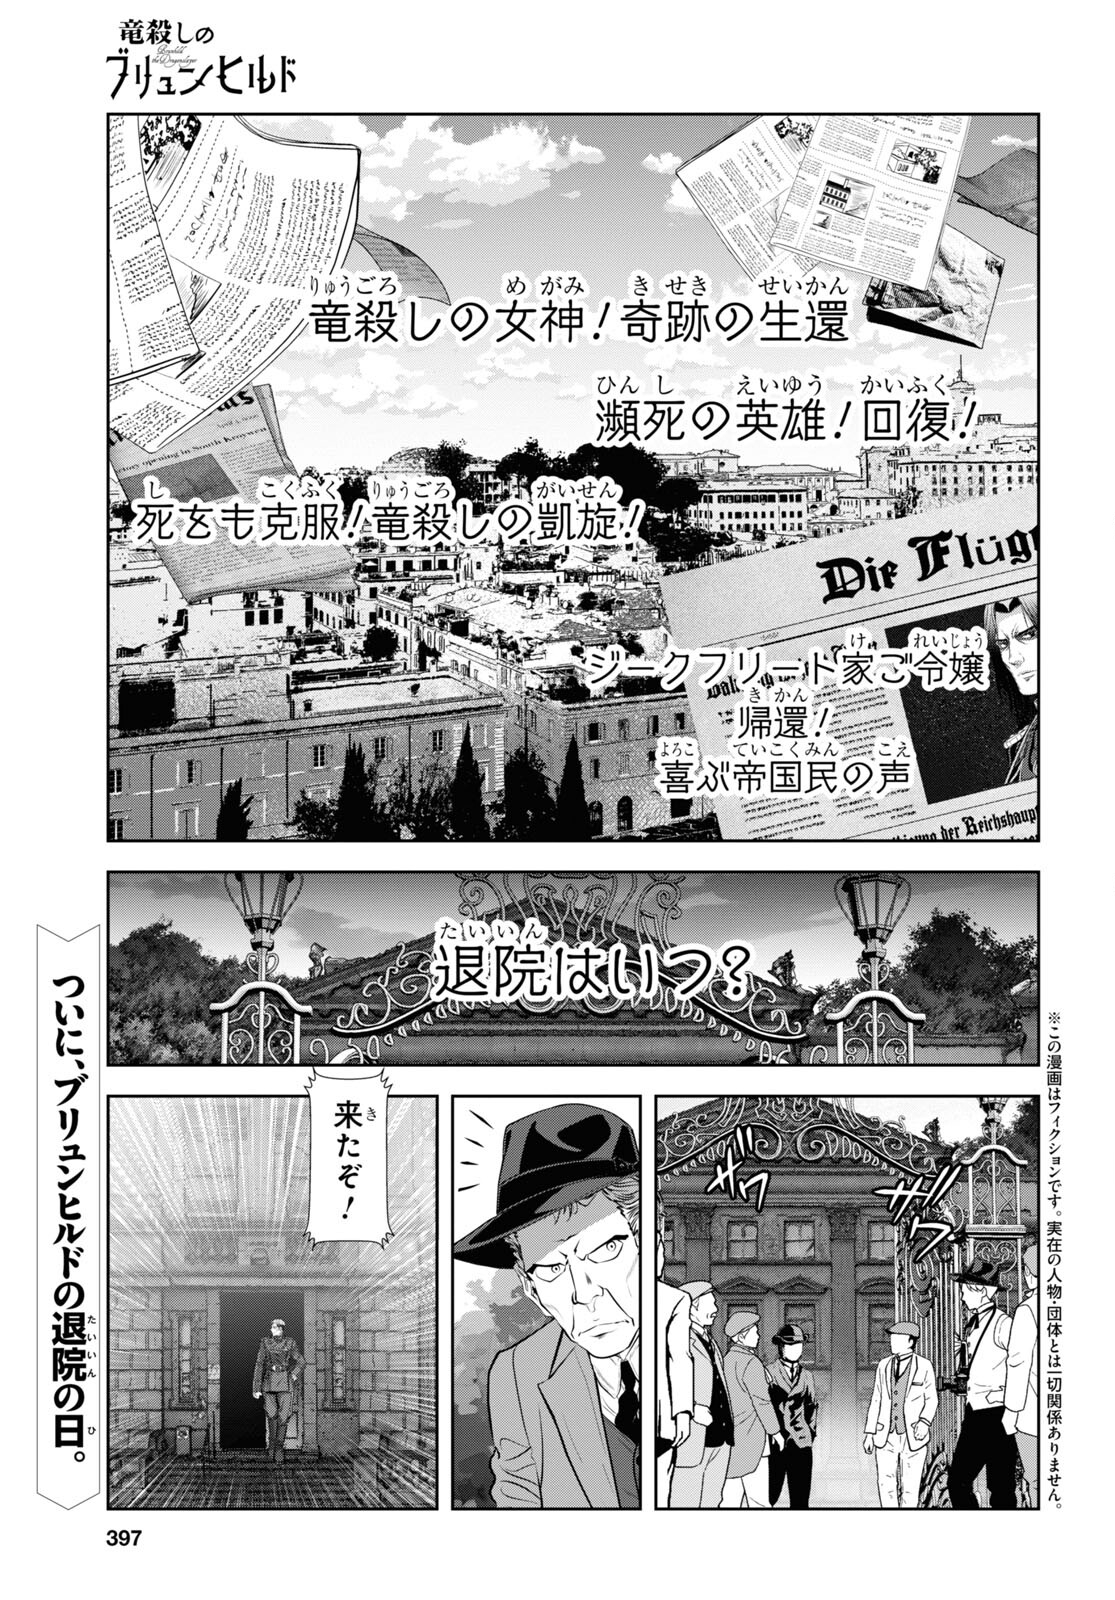 Ryuugoroshi no Brunhild - Chapter 16 - Page 1